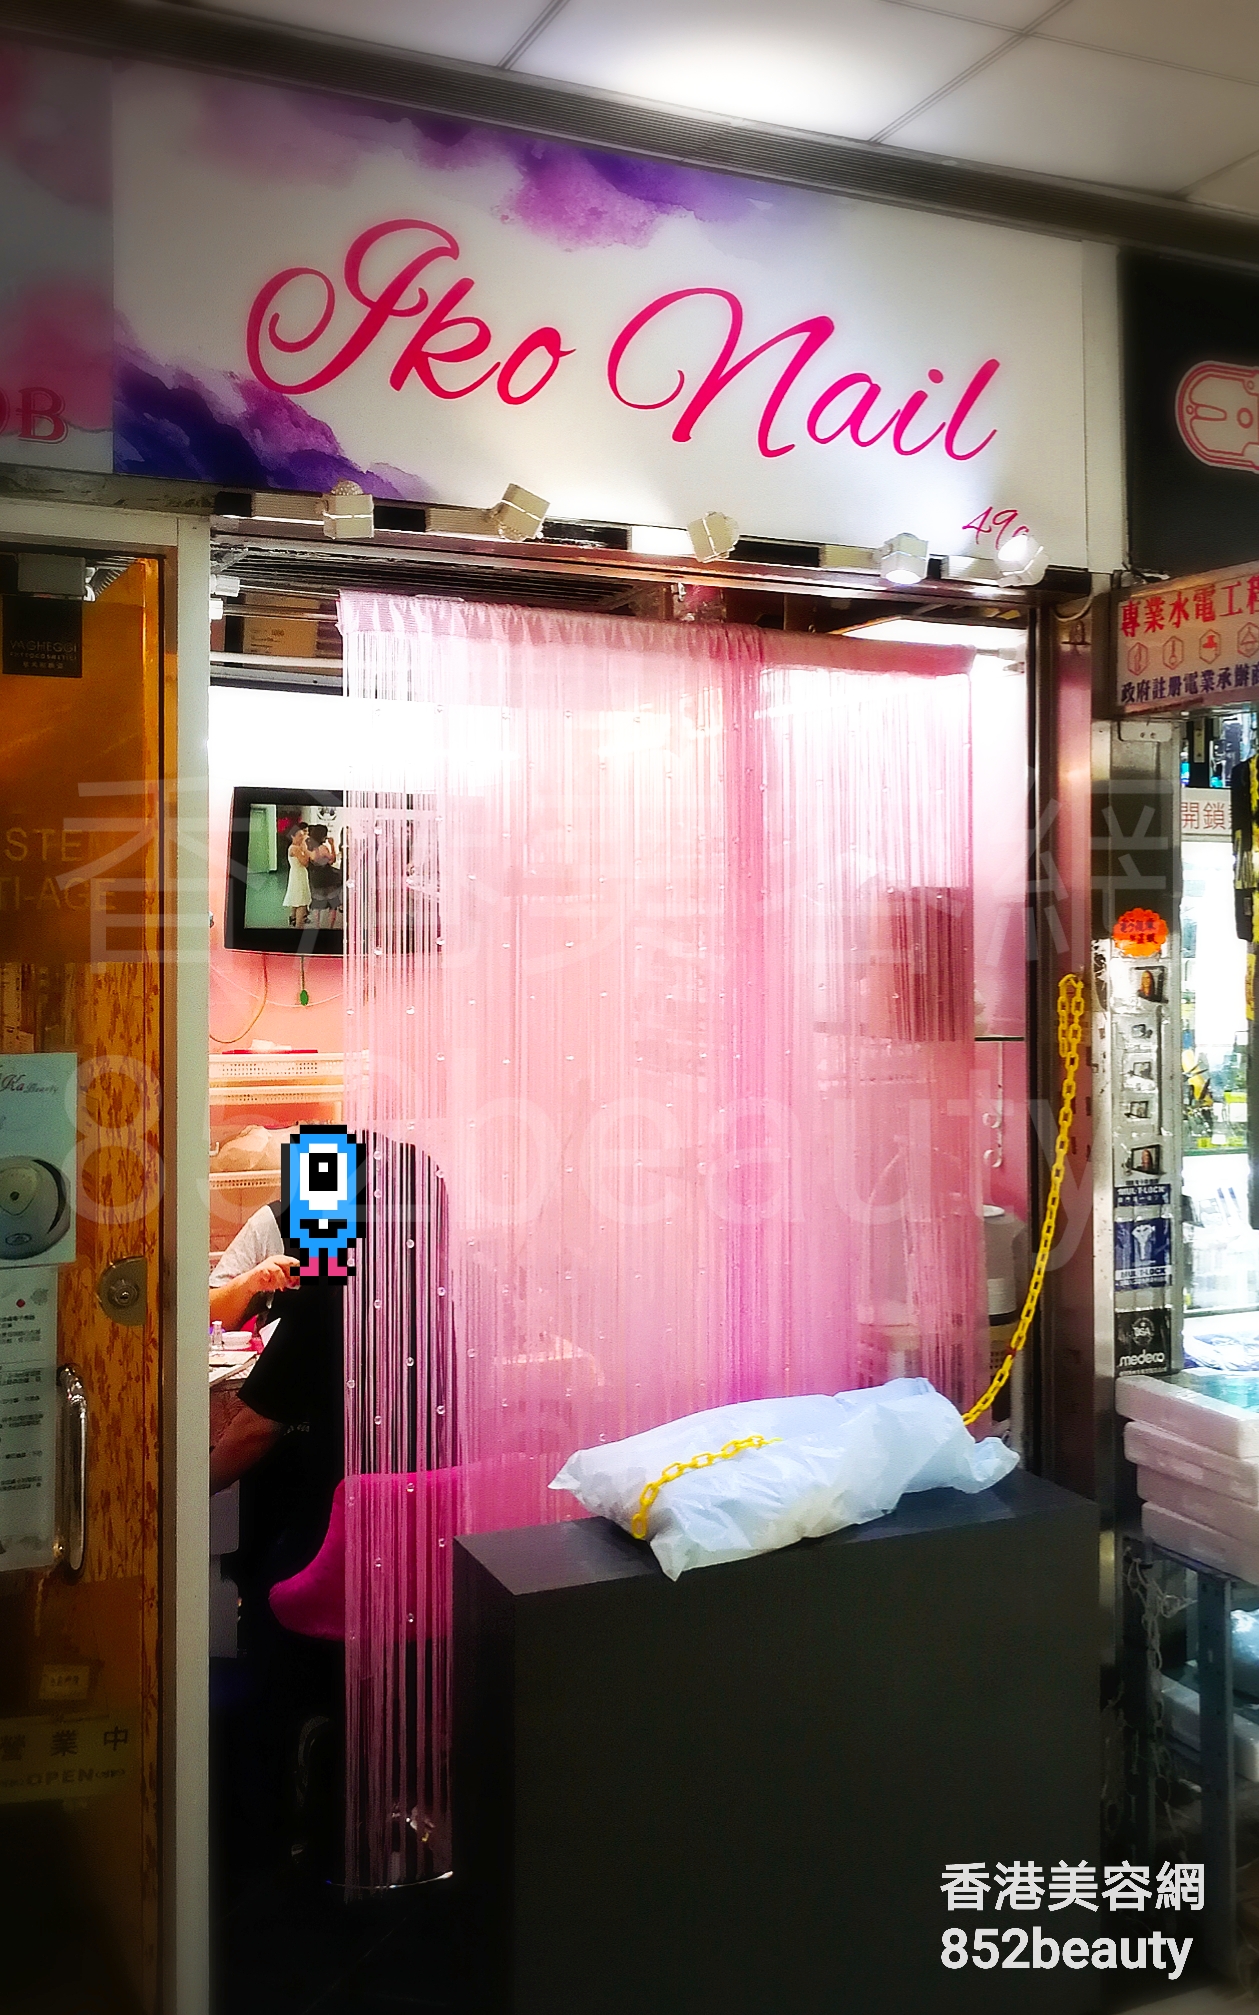 香港美容網 Hong Kong Beauty Salon 美容院 / 美容師: Iko nail